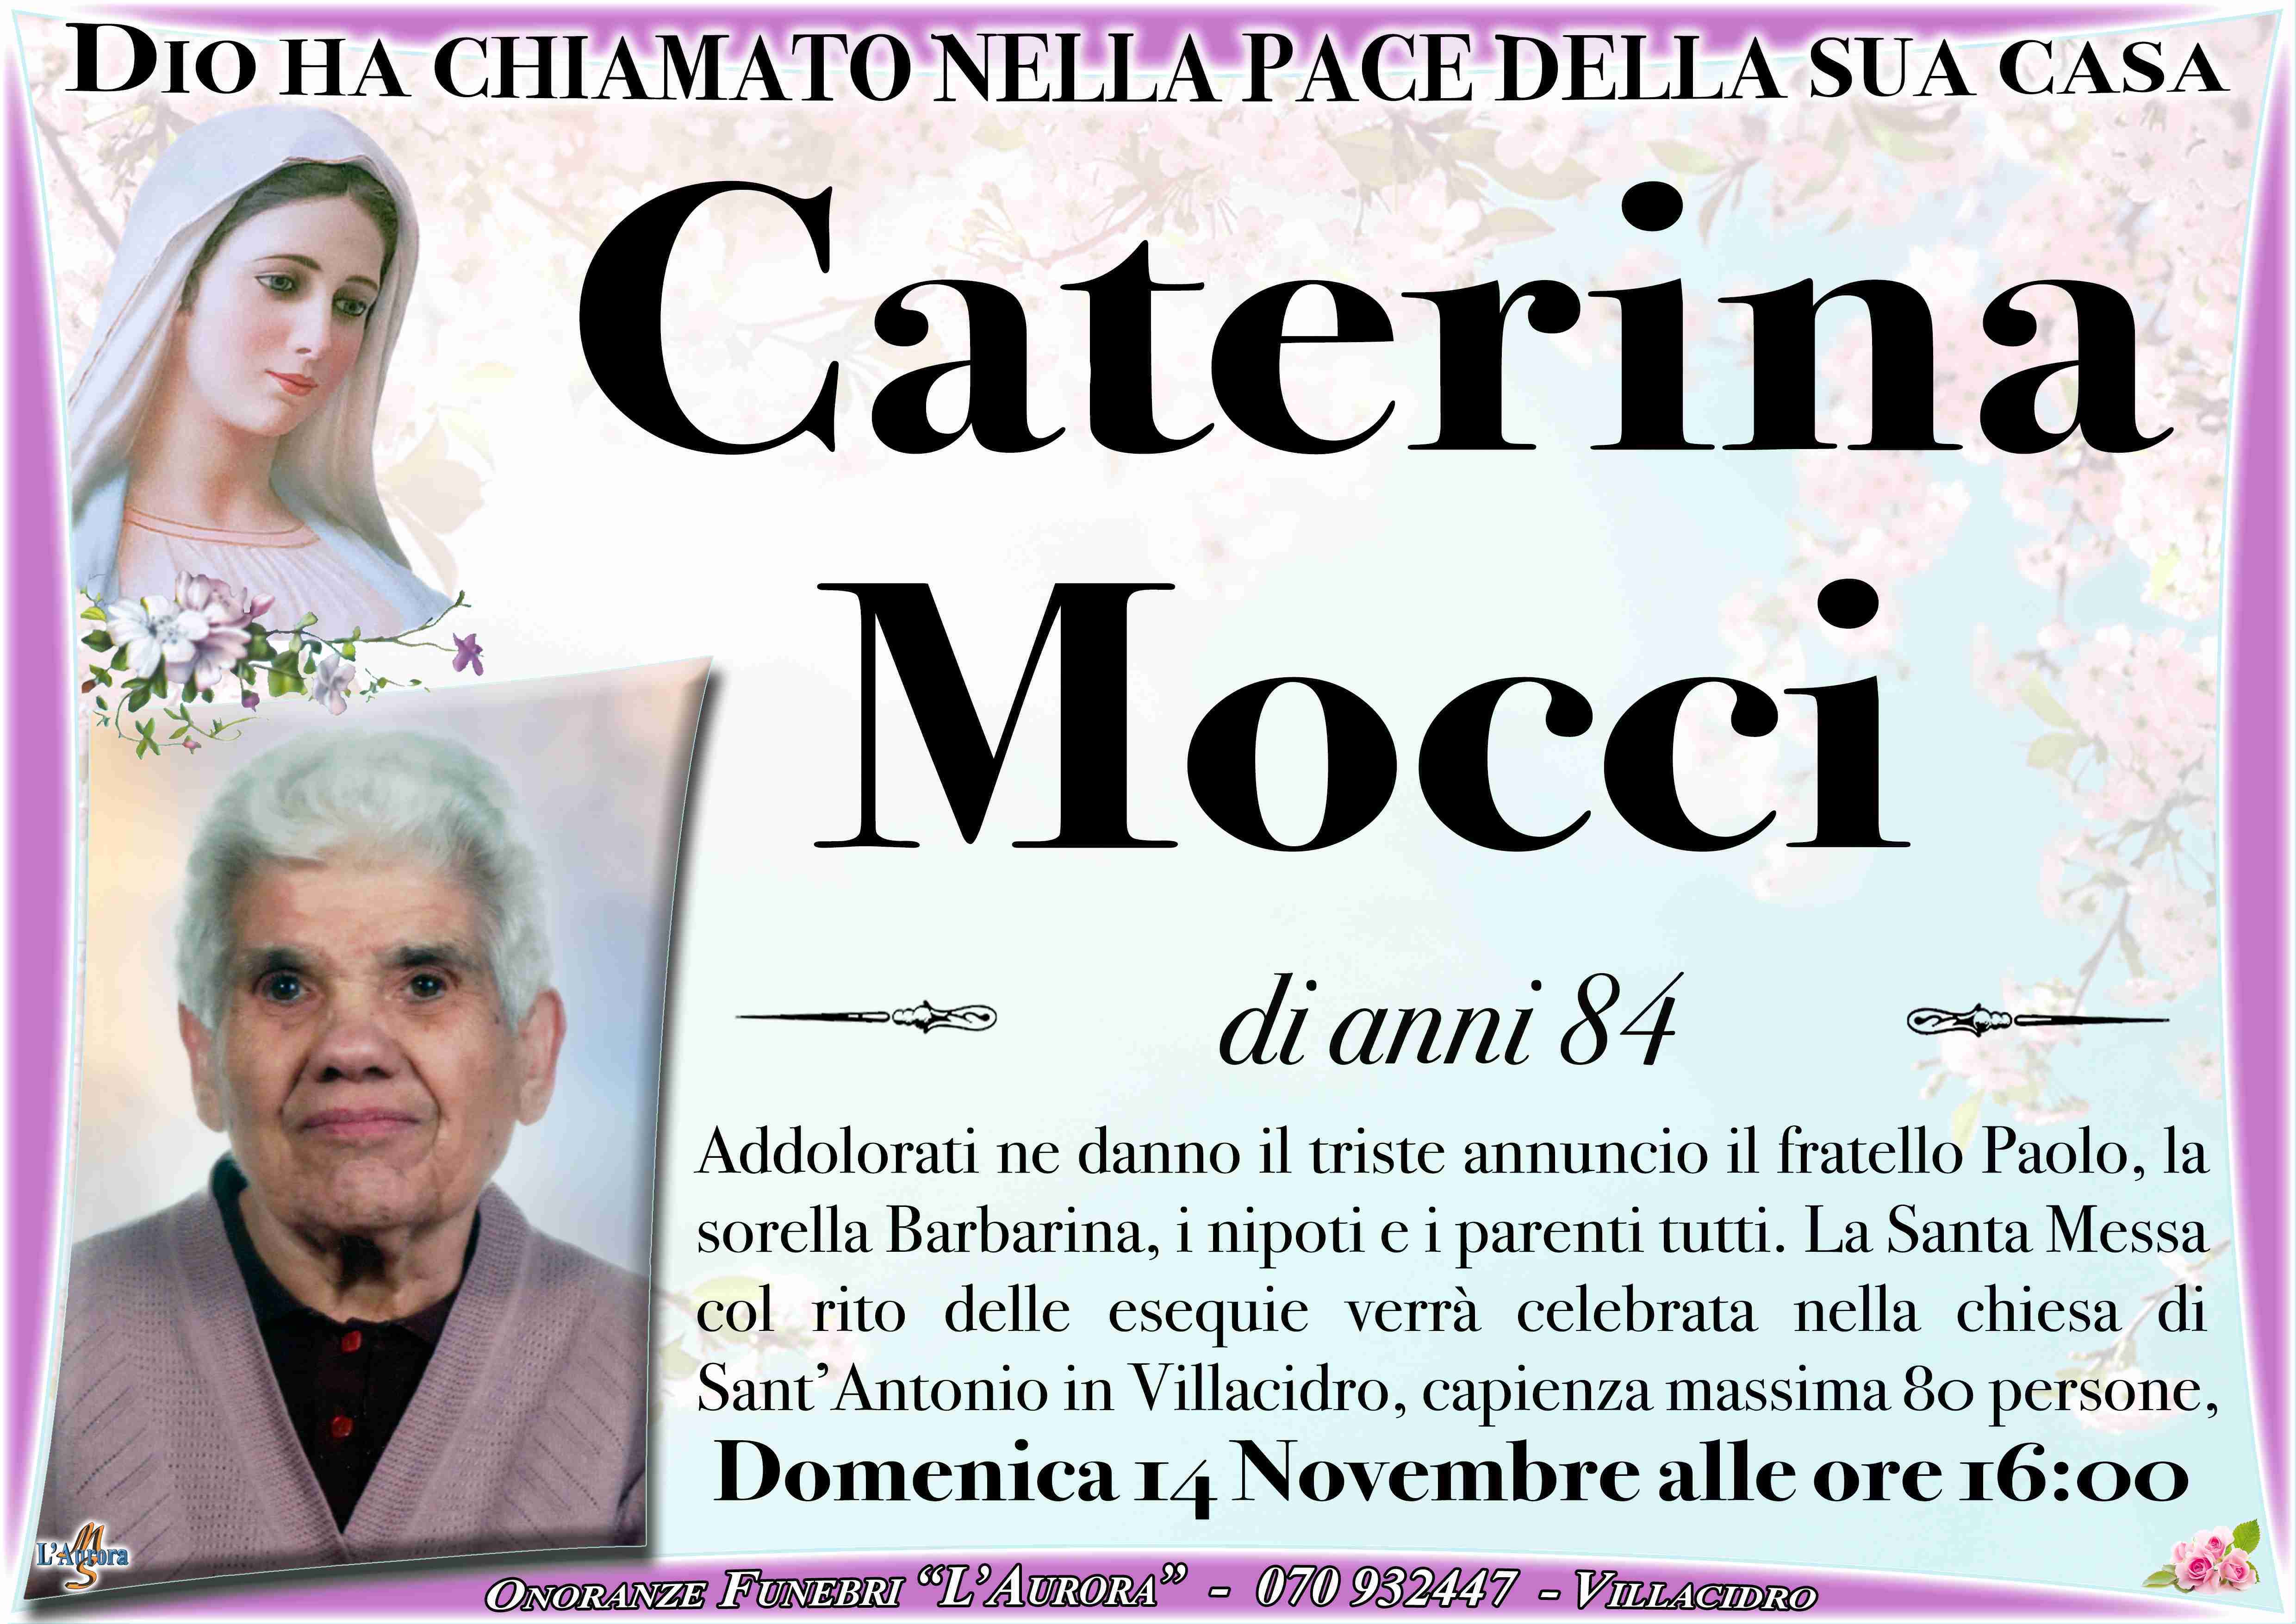 Caterina Mocci